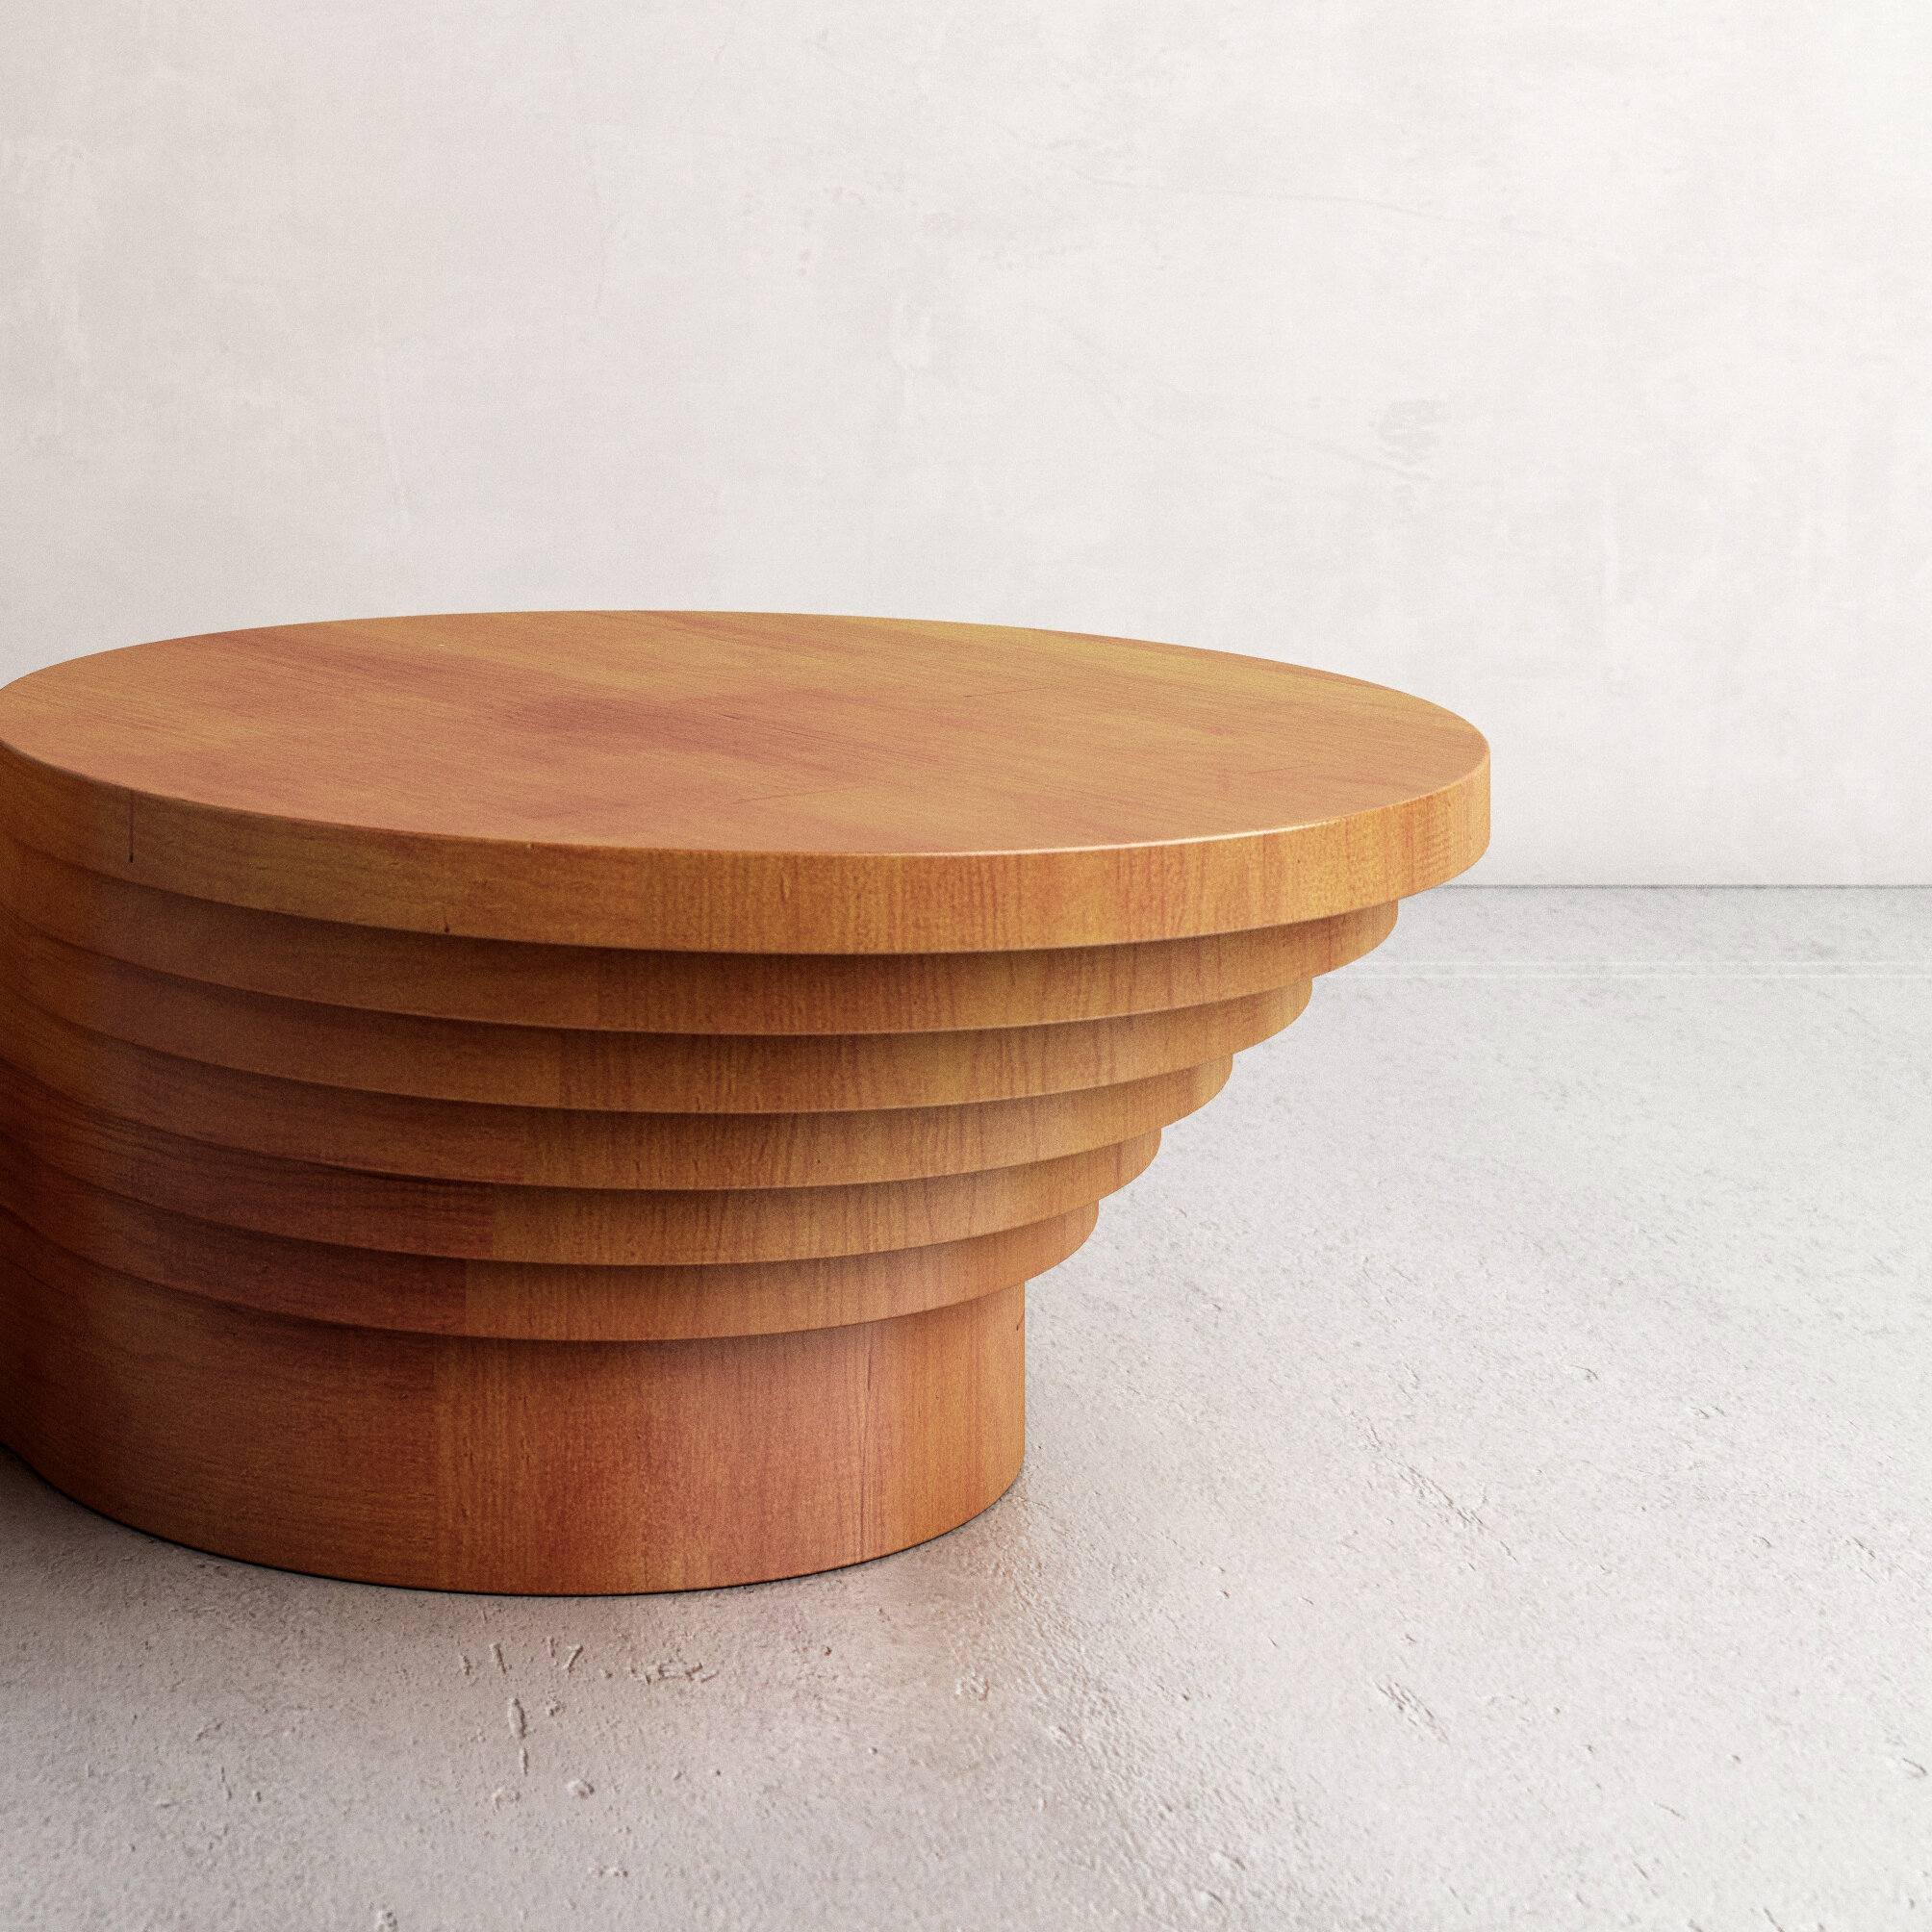 SLICE-ME-UP-coffee-table-Pietro-Franceschini-wood-06.jpg